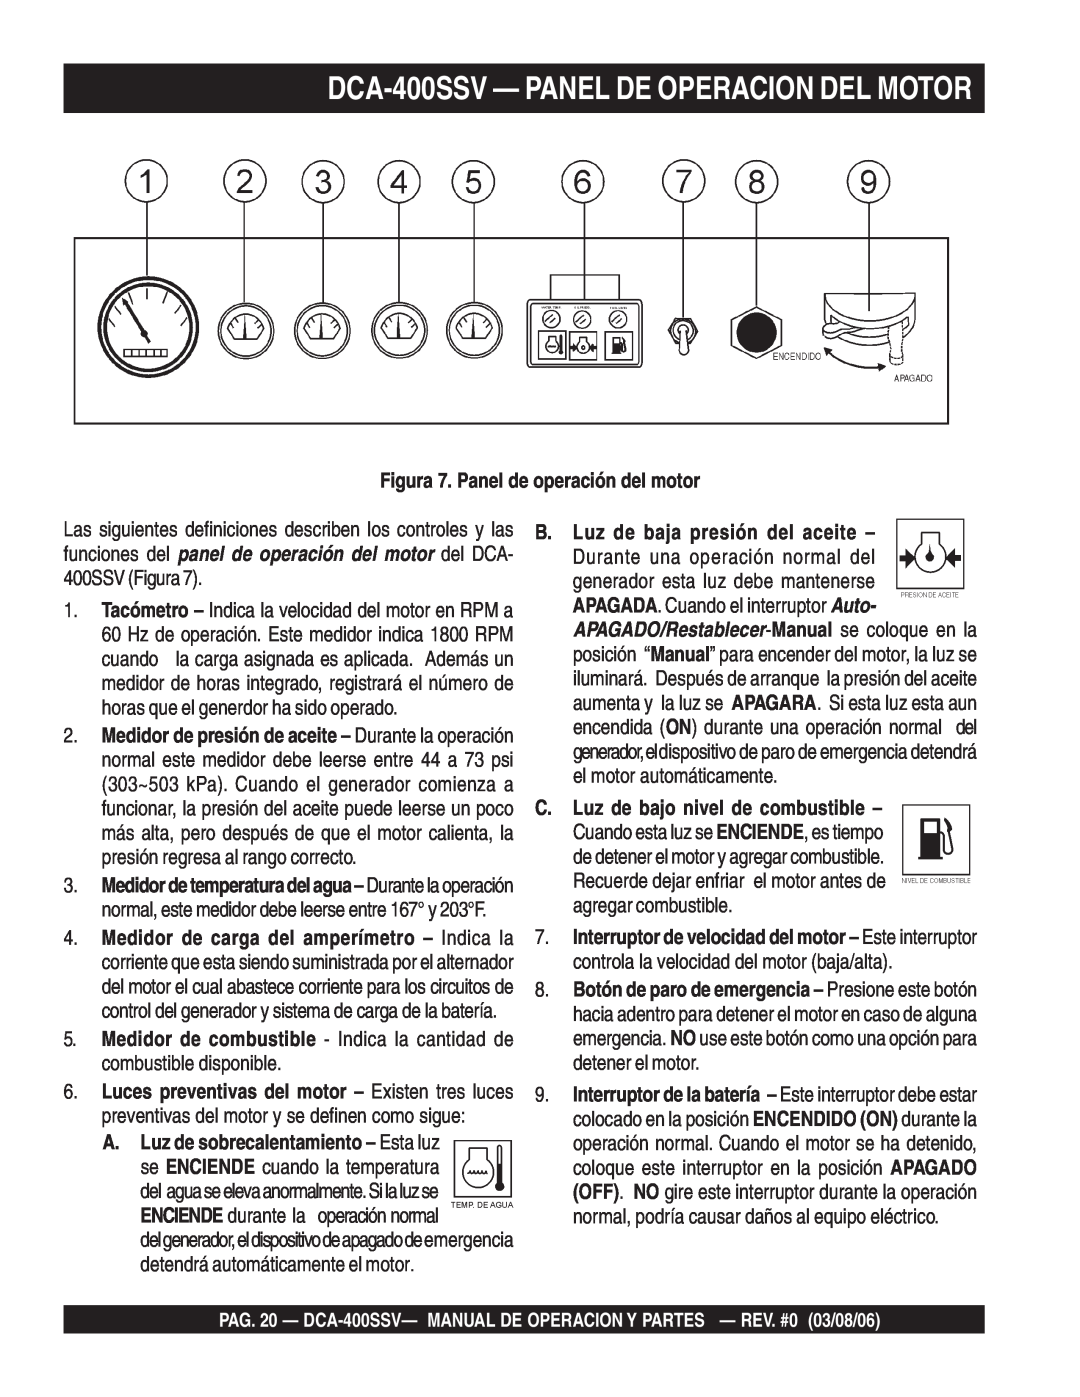 Multiquip operation manual DCA-400SSV— PANEL DE OPERACION DEL MOTOR, Figura 7. Panel de operación del motor 